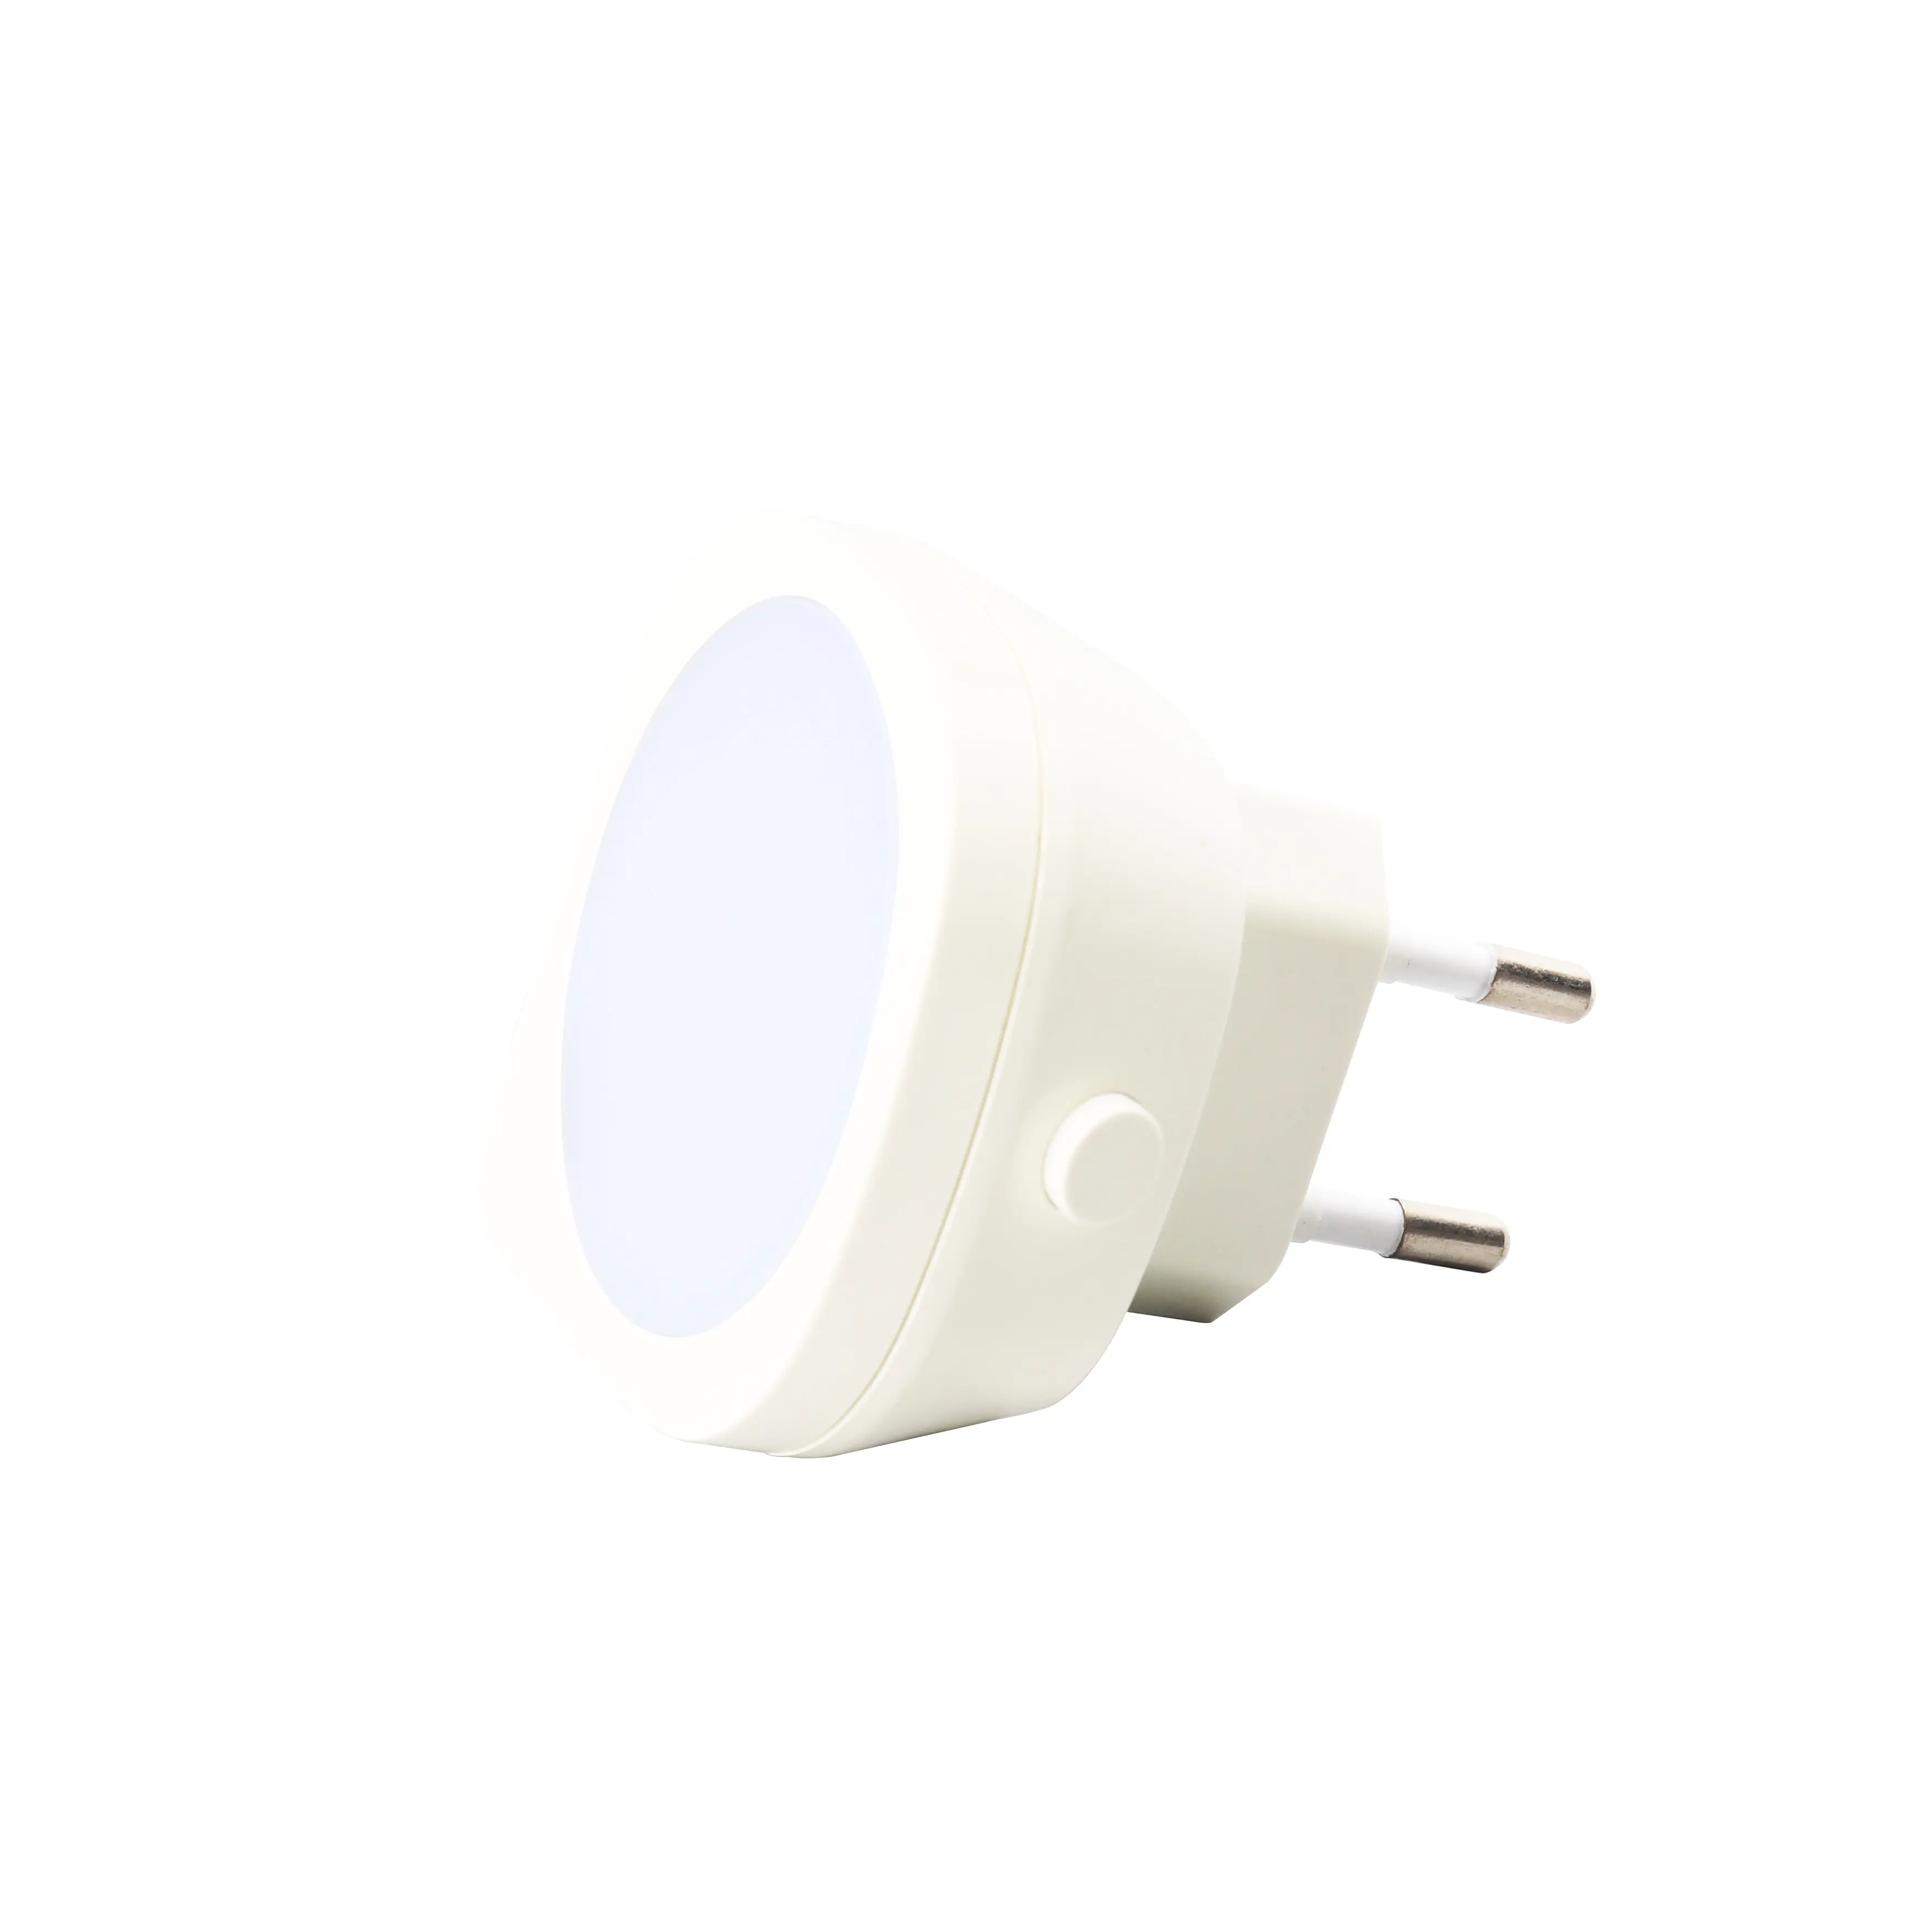 Q-type mini switch nightlight UL/CUL/CE approved wall light plug-in night lamp